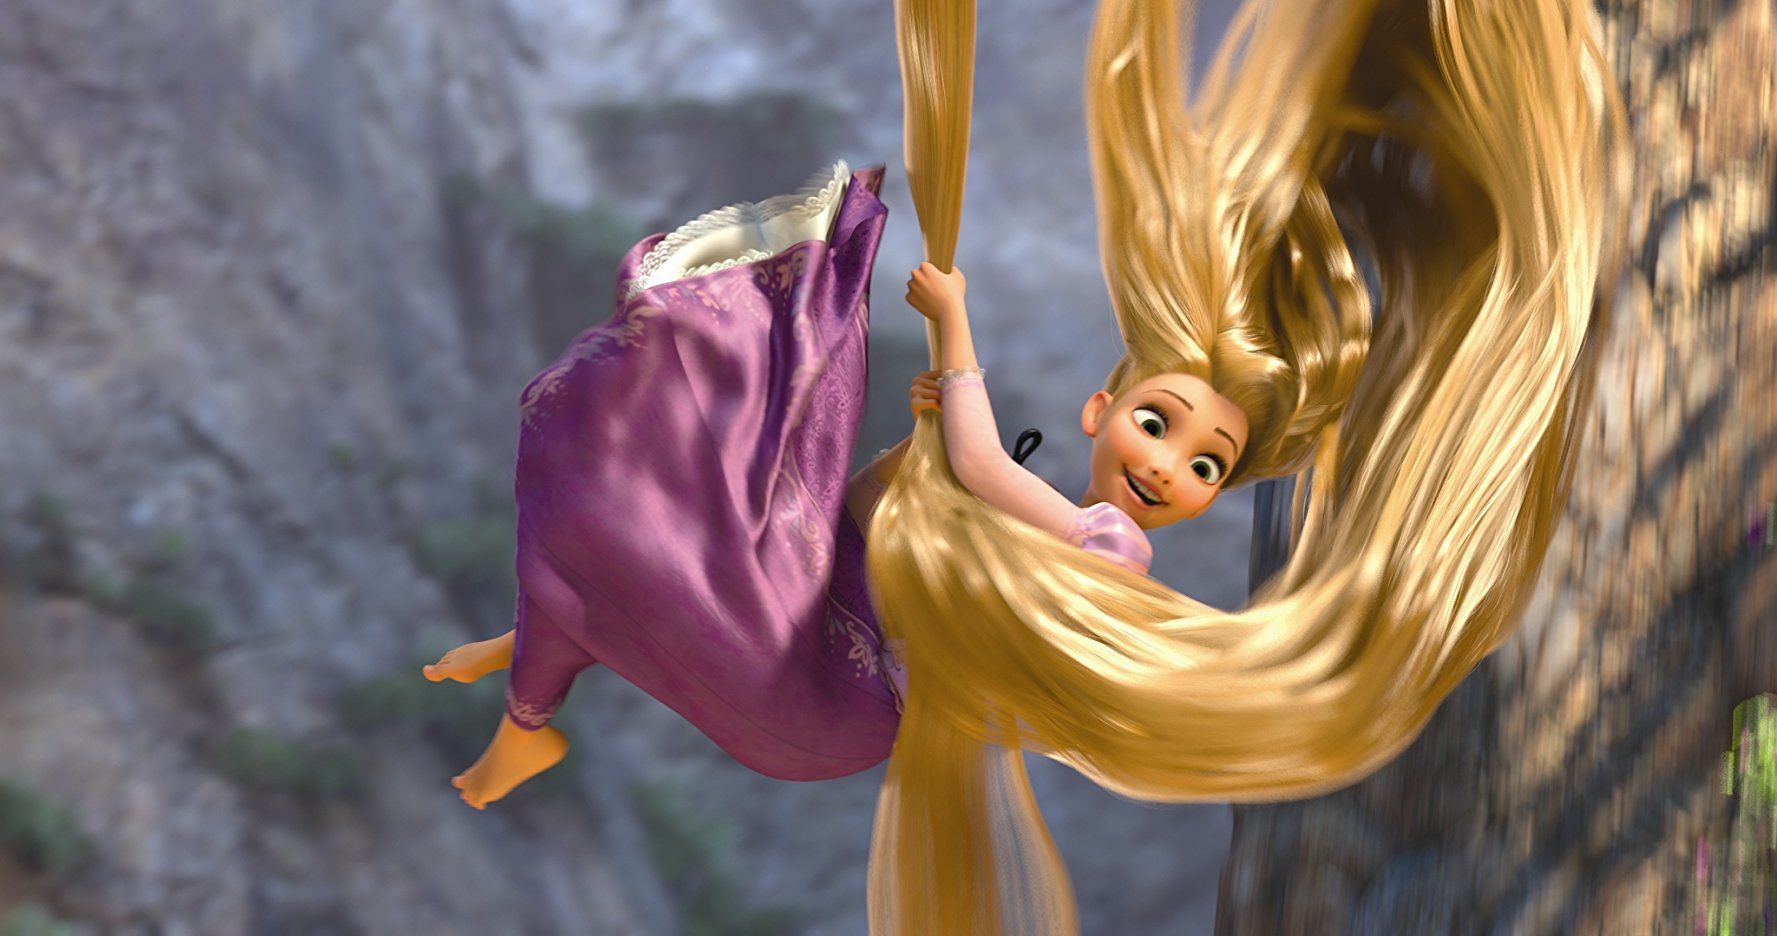 5. Rapunzel